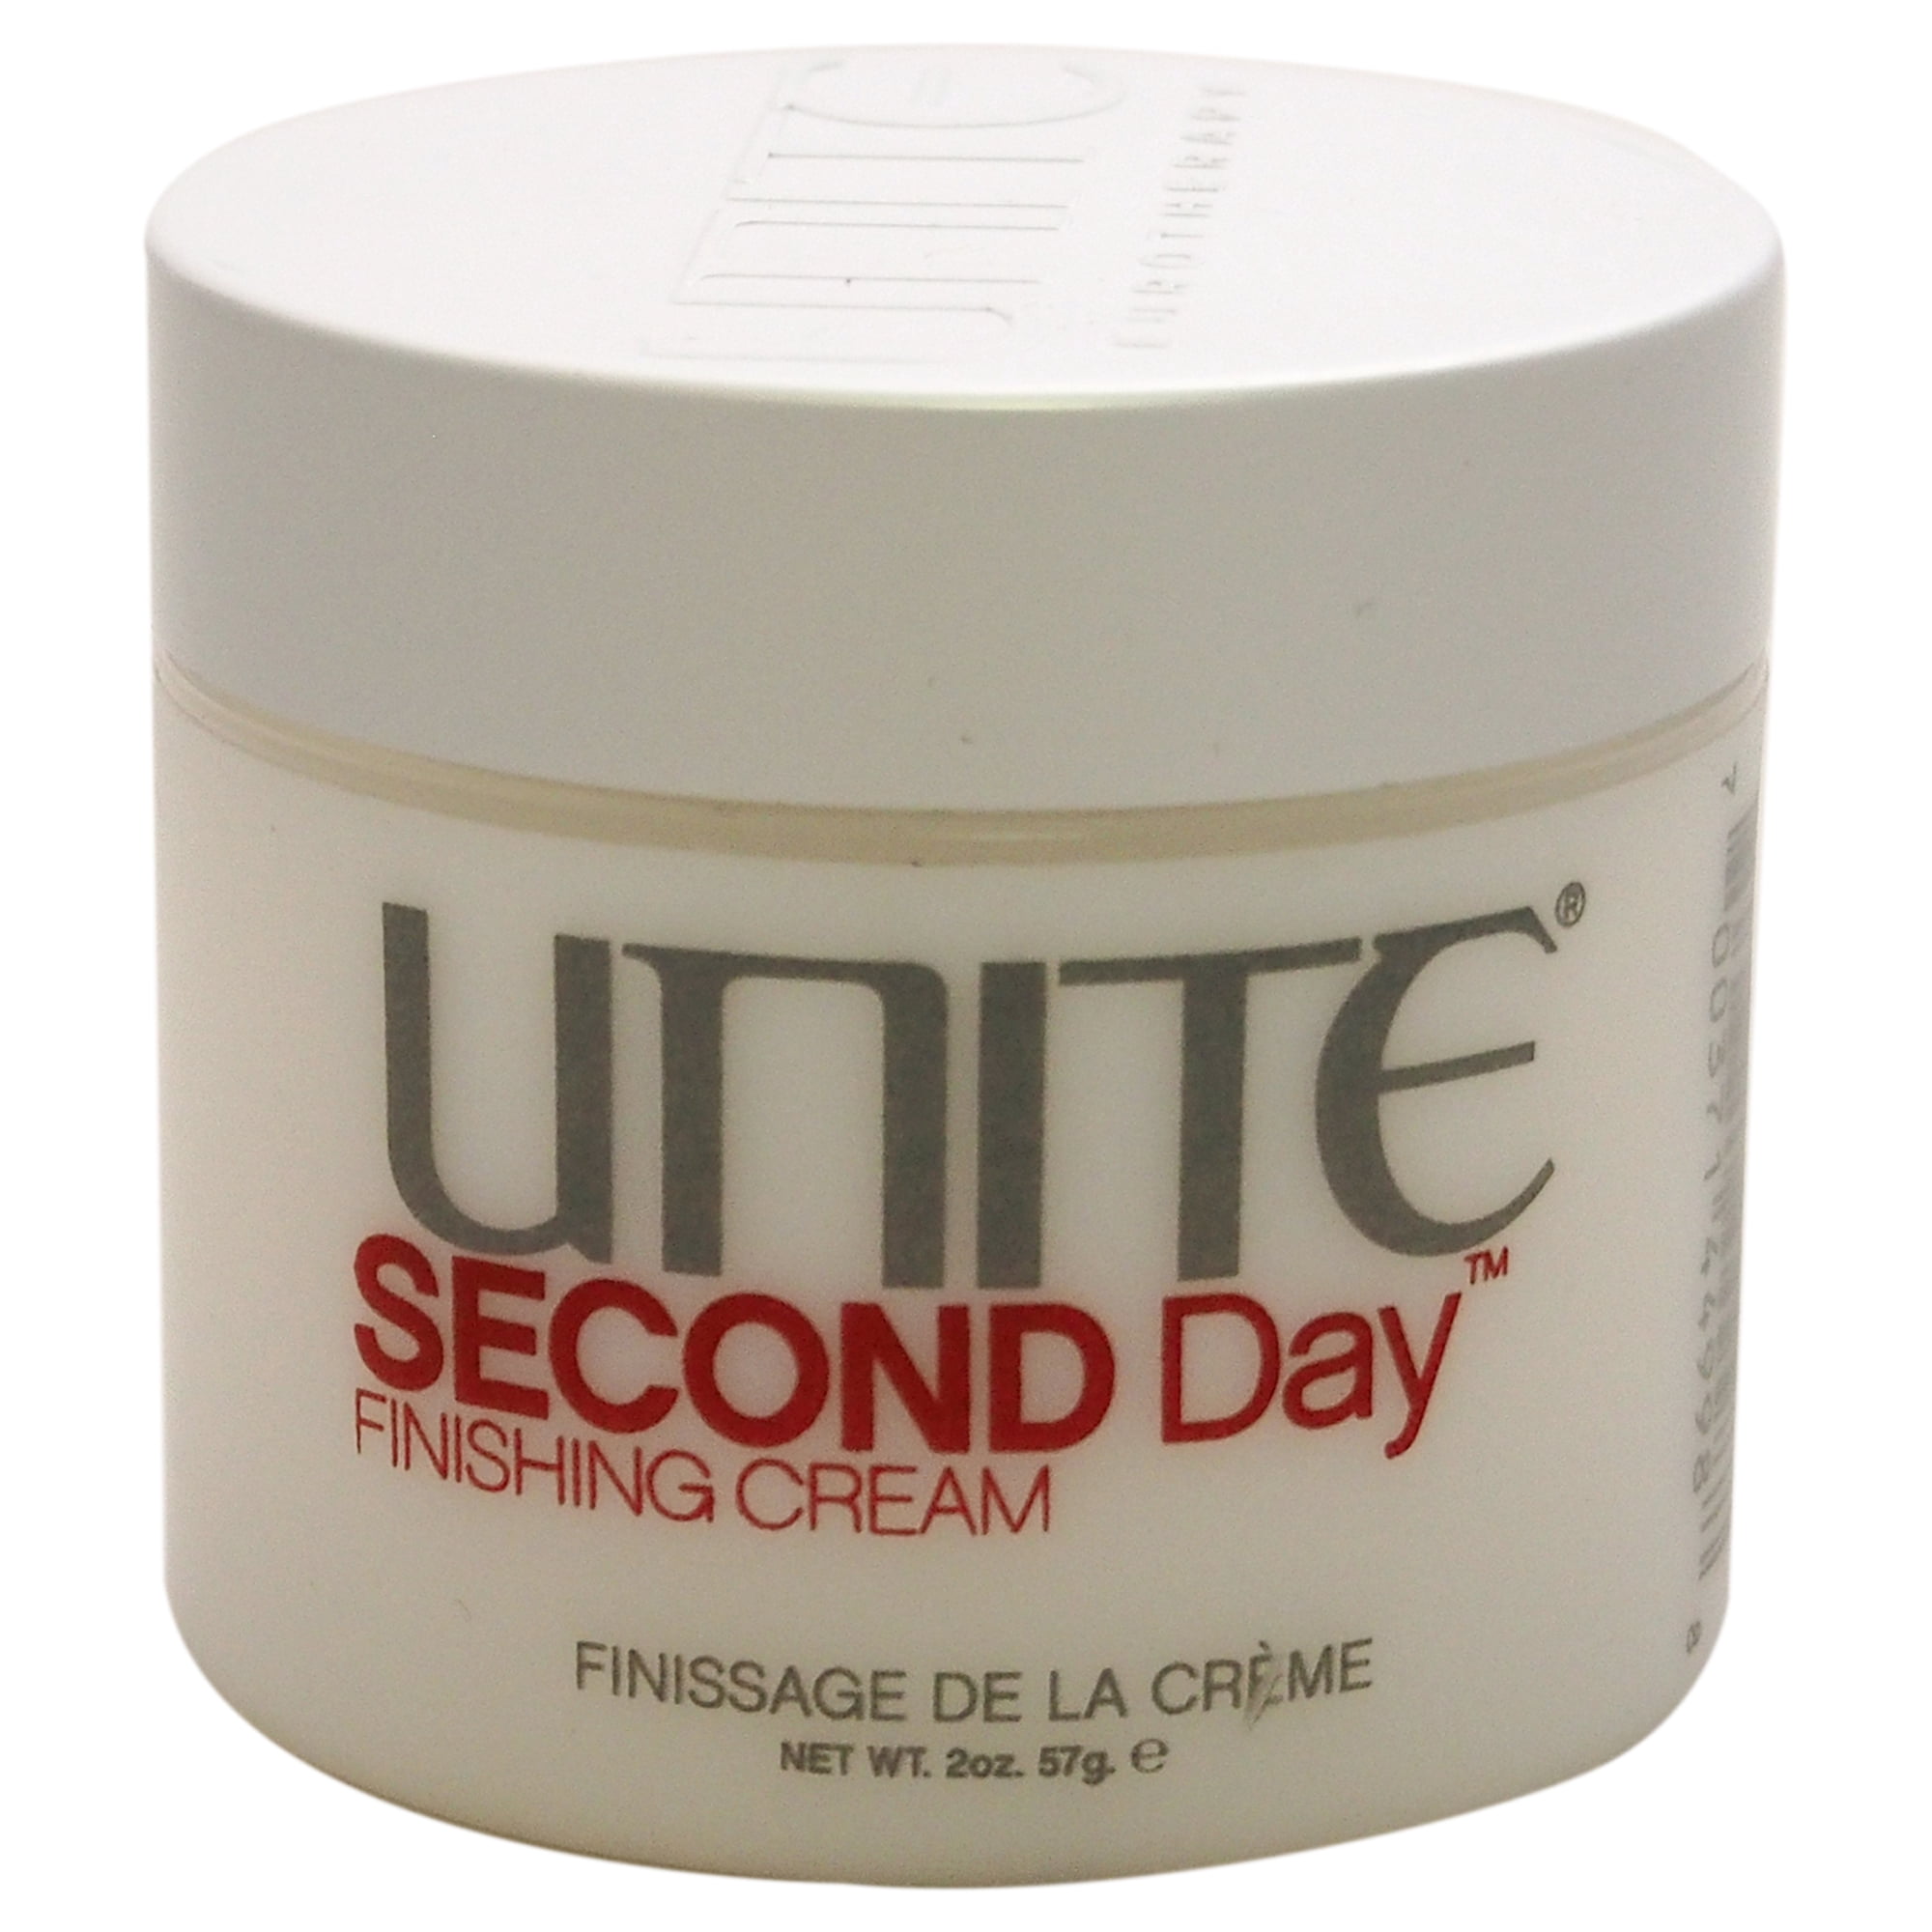 Second Day Finishing Cream by Unite for Unisex - 2 oz Cream | Walmart Canada